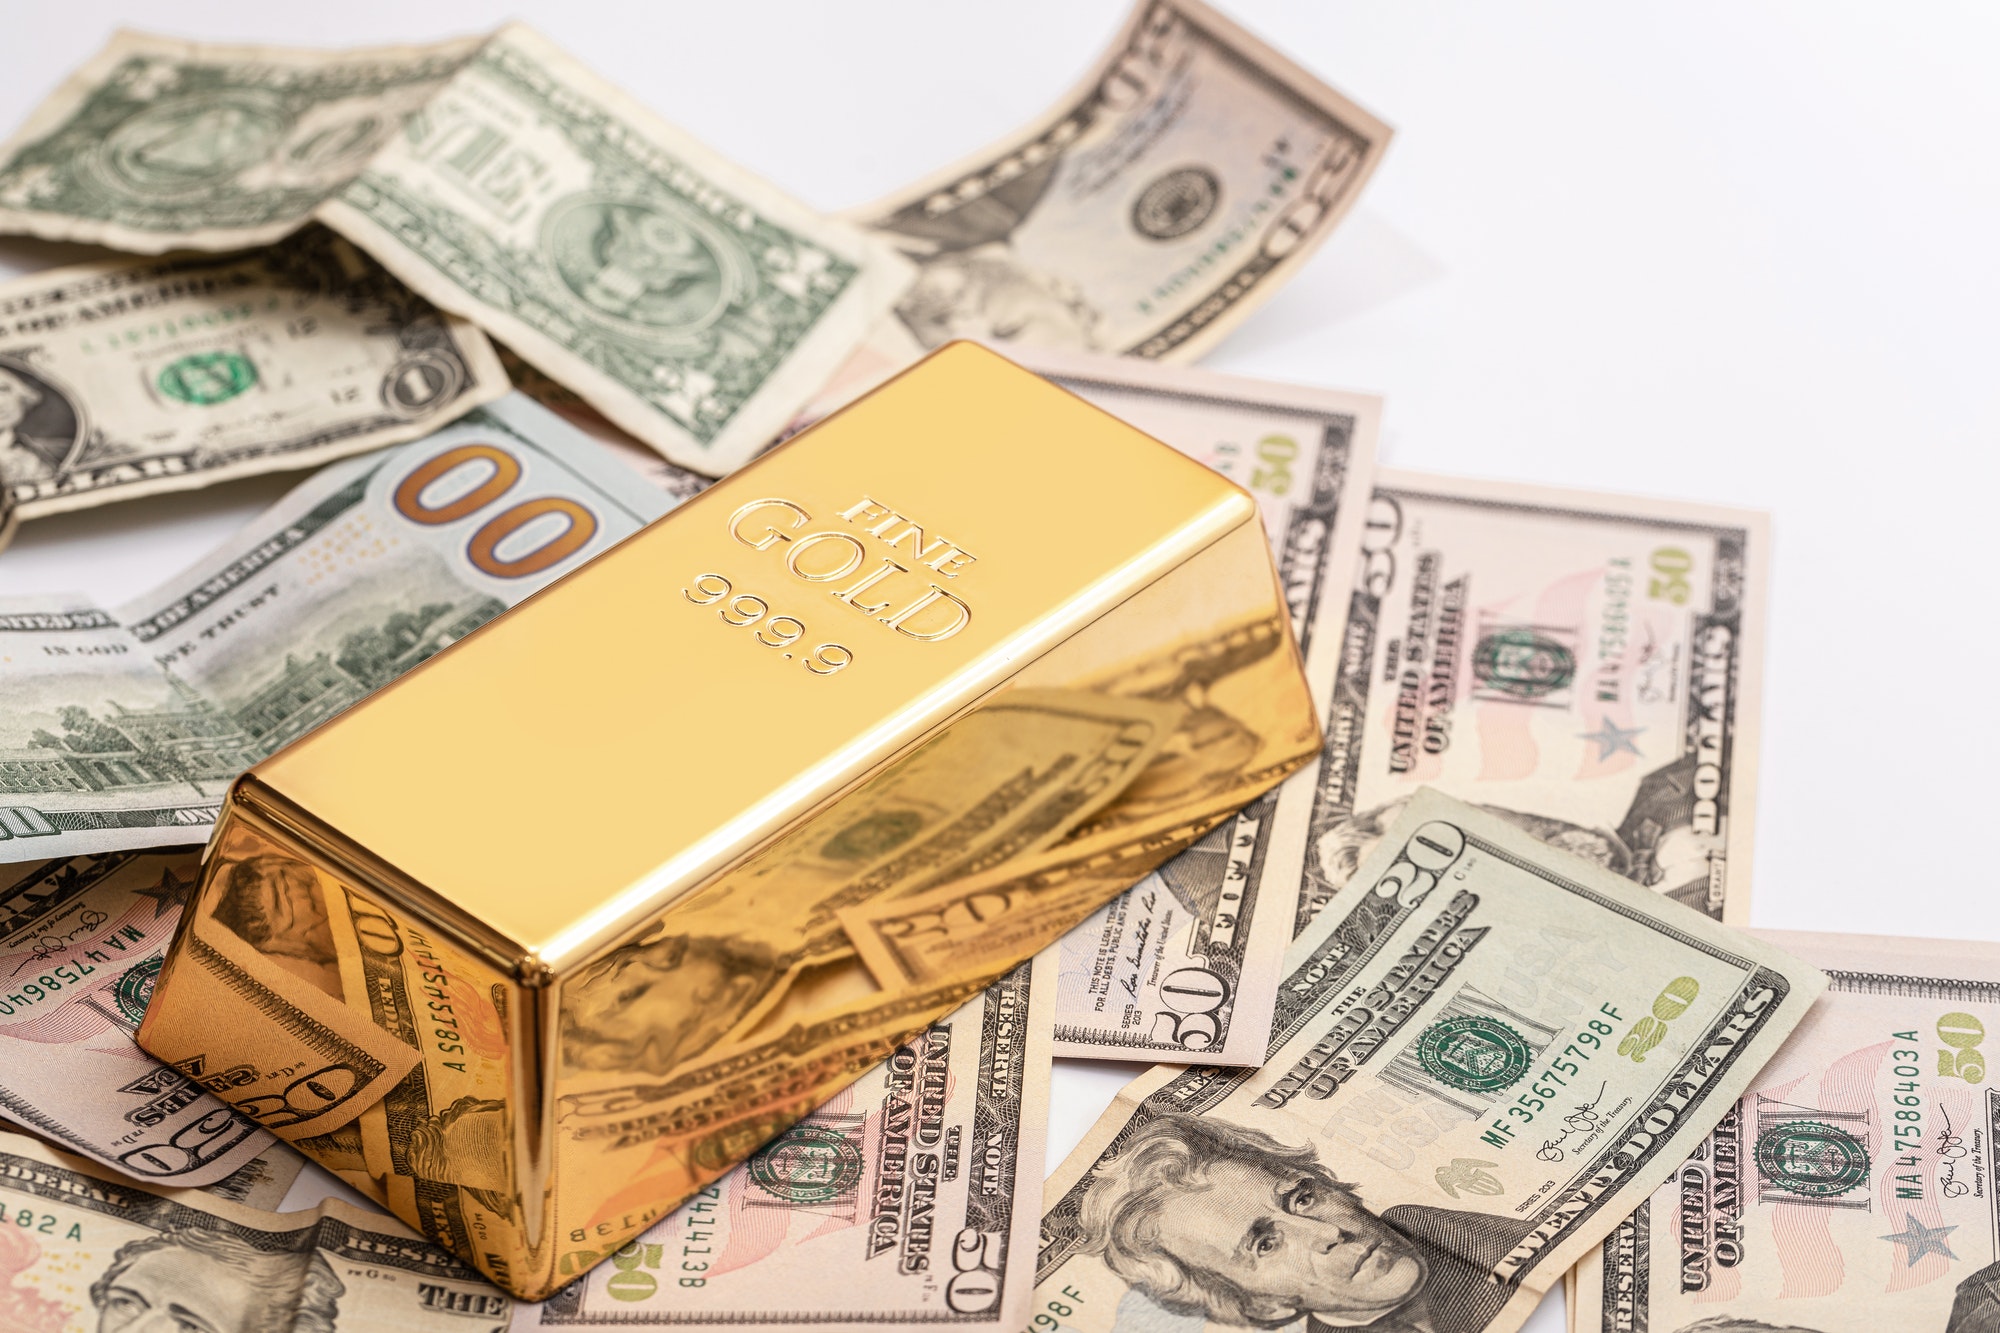 Expensive gold bar and US dollar bills